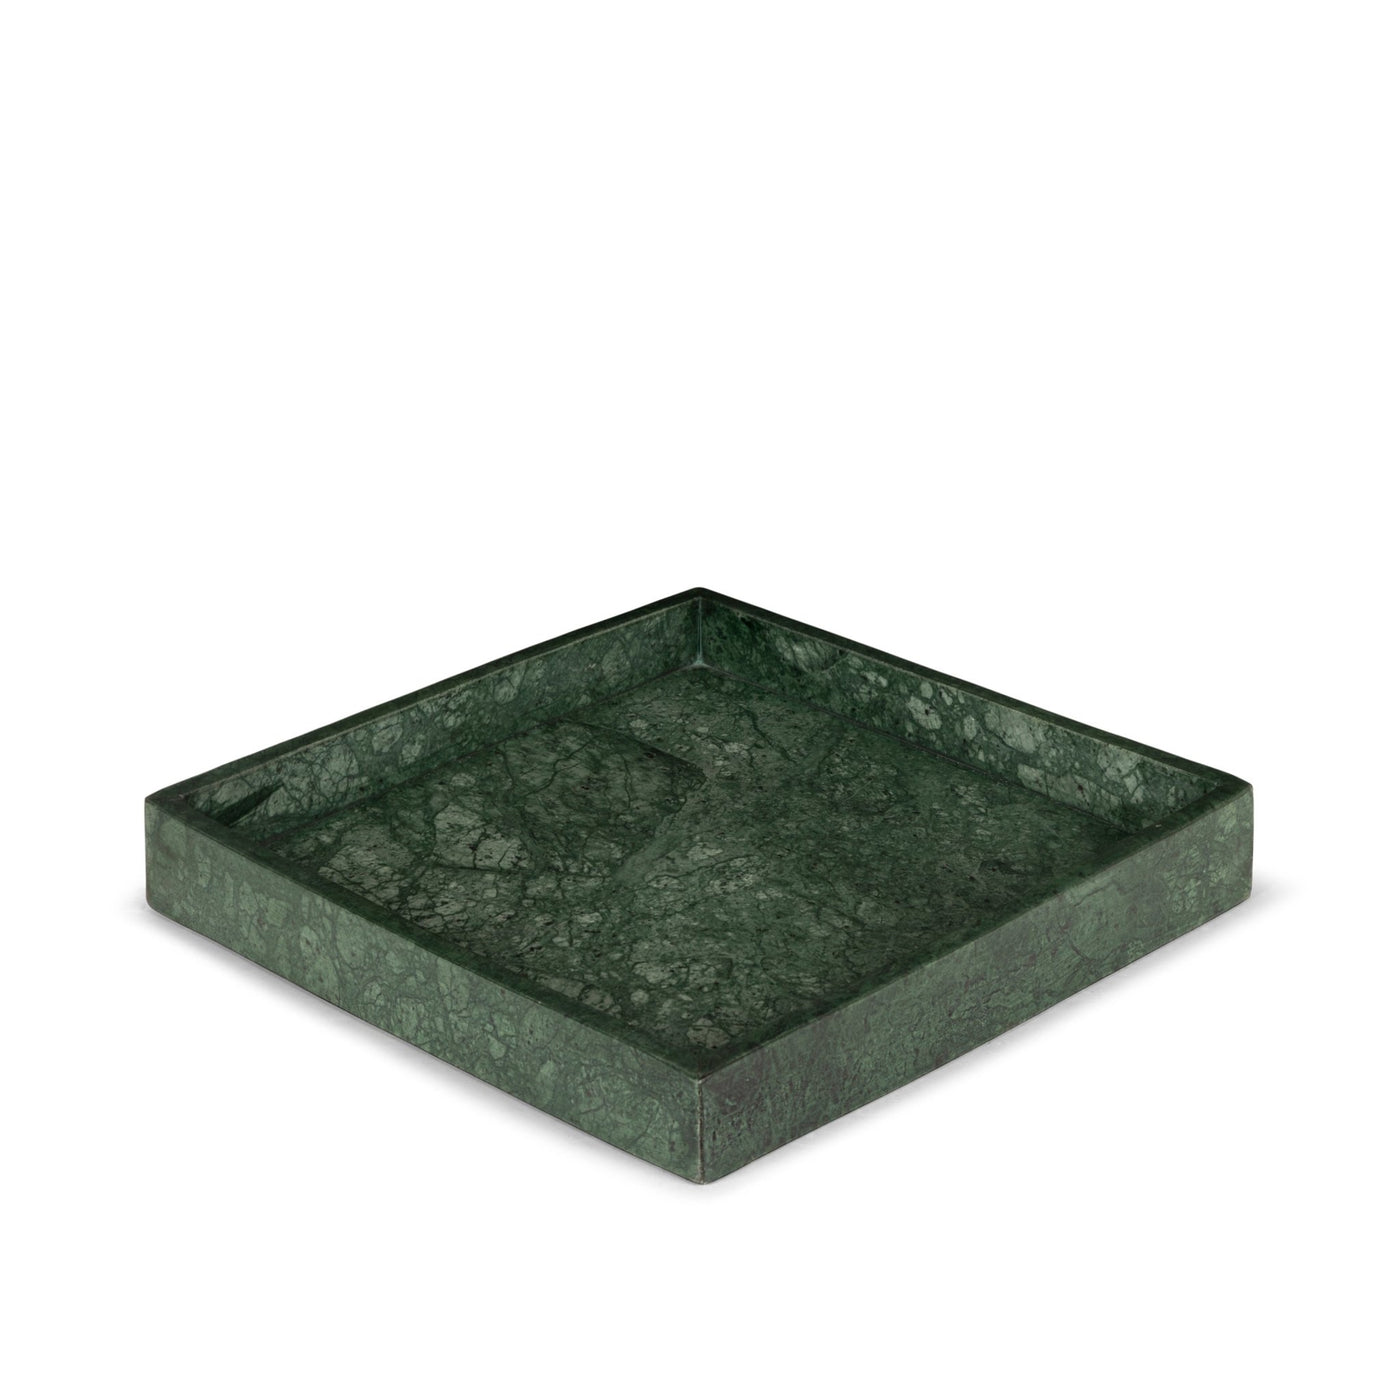 Stoned Marble Tablett aus grünem Marmor ca. L30xB30xH5cm & ca. 6kg - Bitangel RENOVATE & FURNISH HOMES GmbH